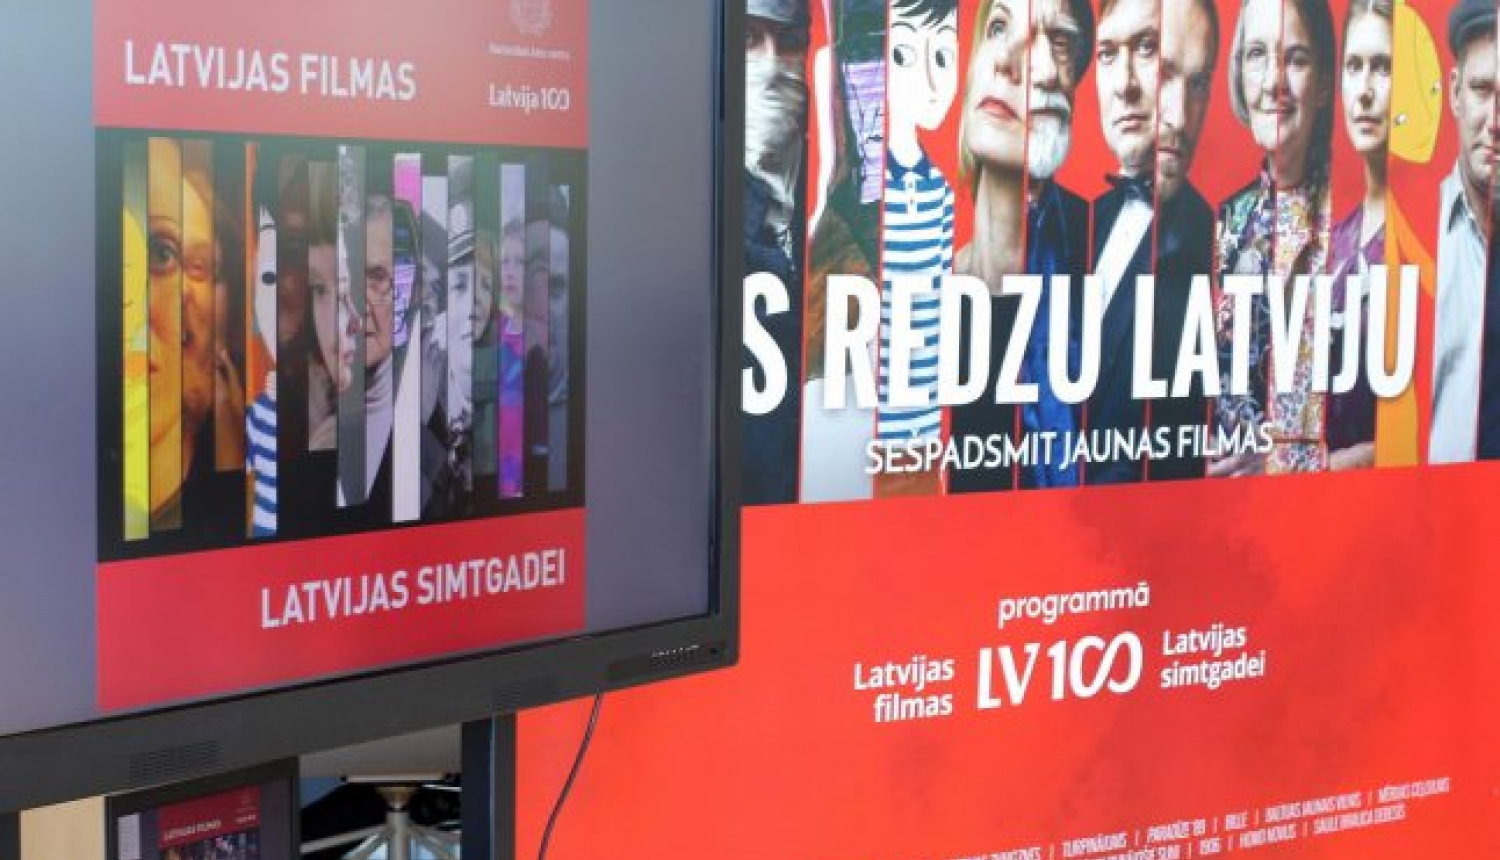 Programma “Latvijas filmas Latvijas simtgadei” ir atklāta